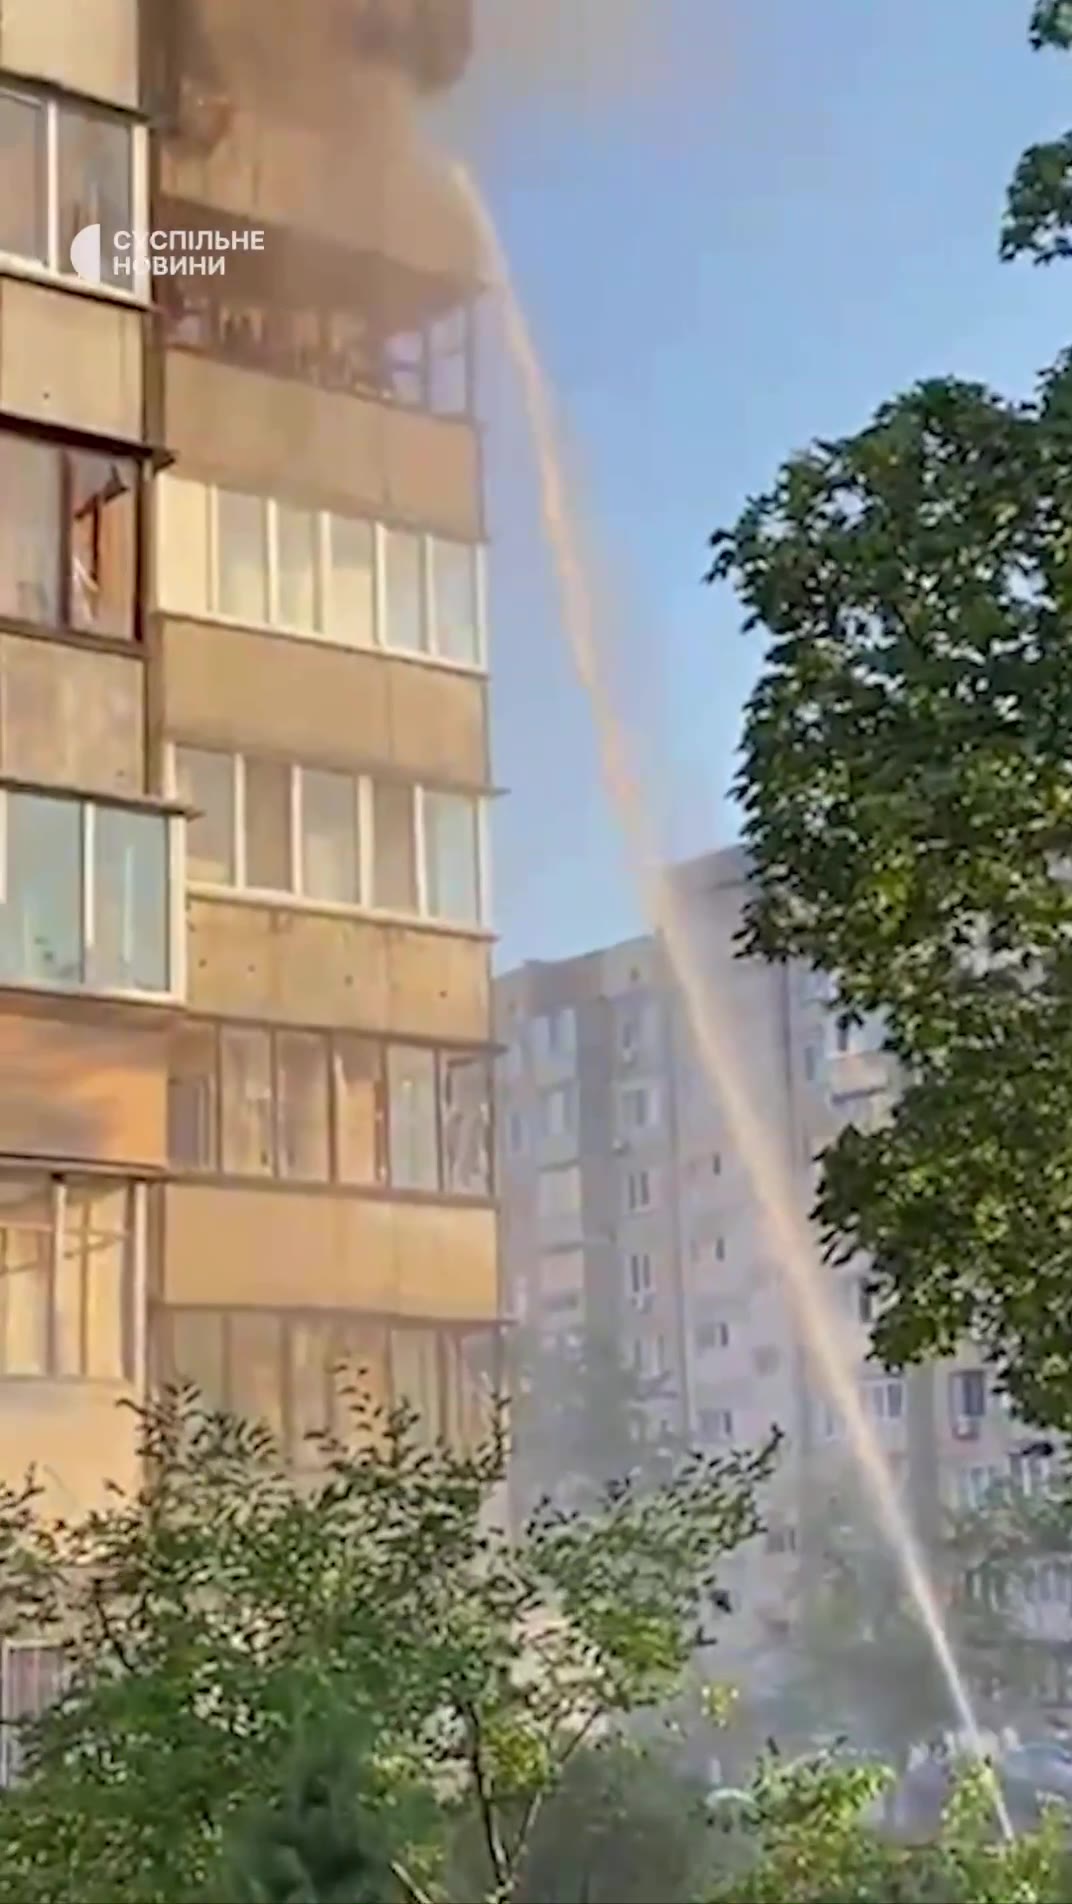 Житловий будинок постраждав внаслідок російського ракетного удару по Оболонському району Києва